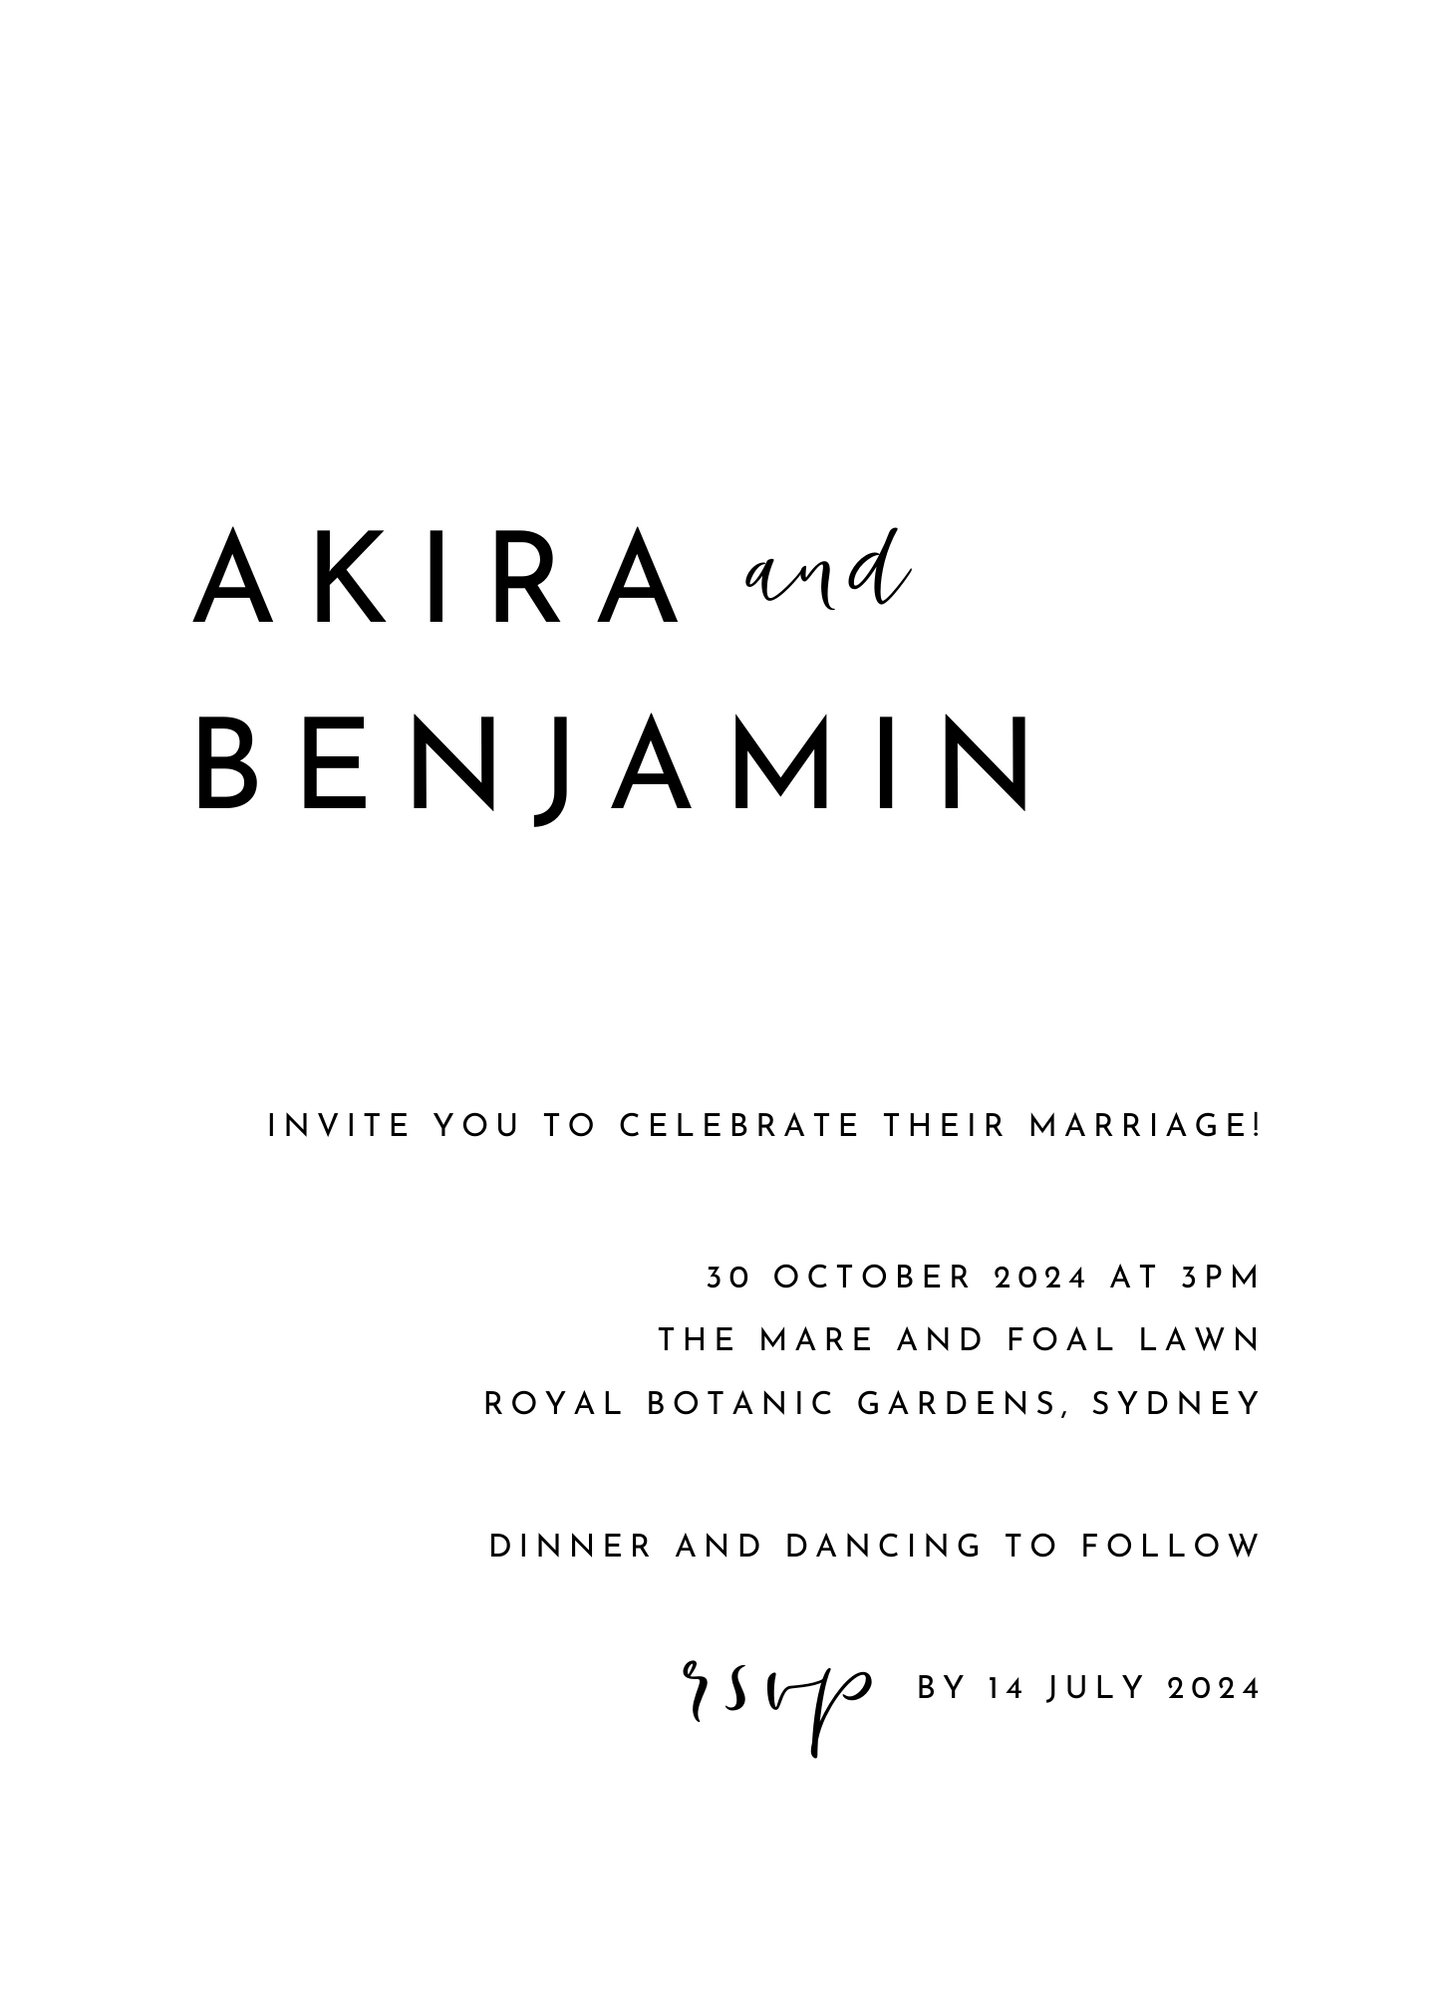 Wedding Invitations - Design and Prints